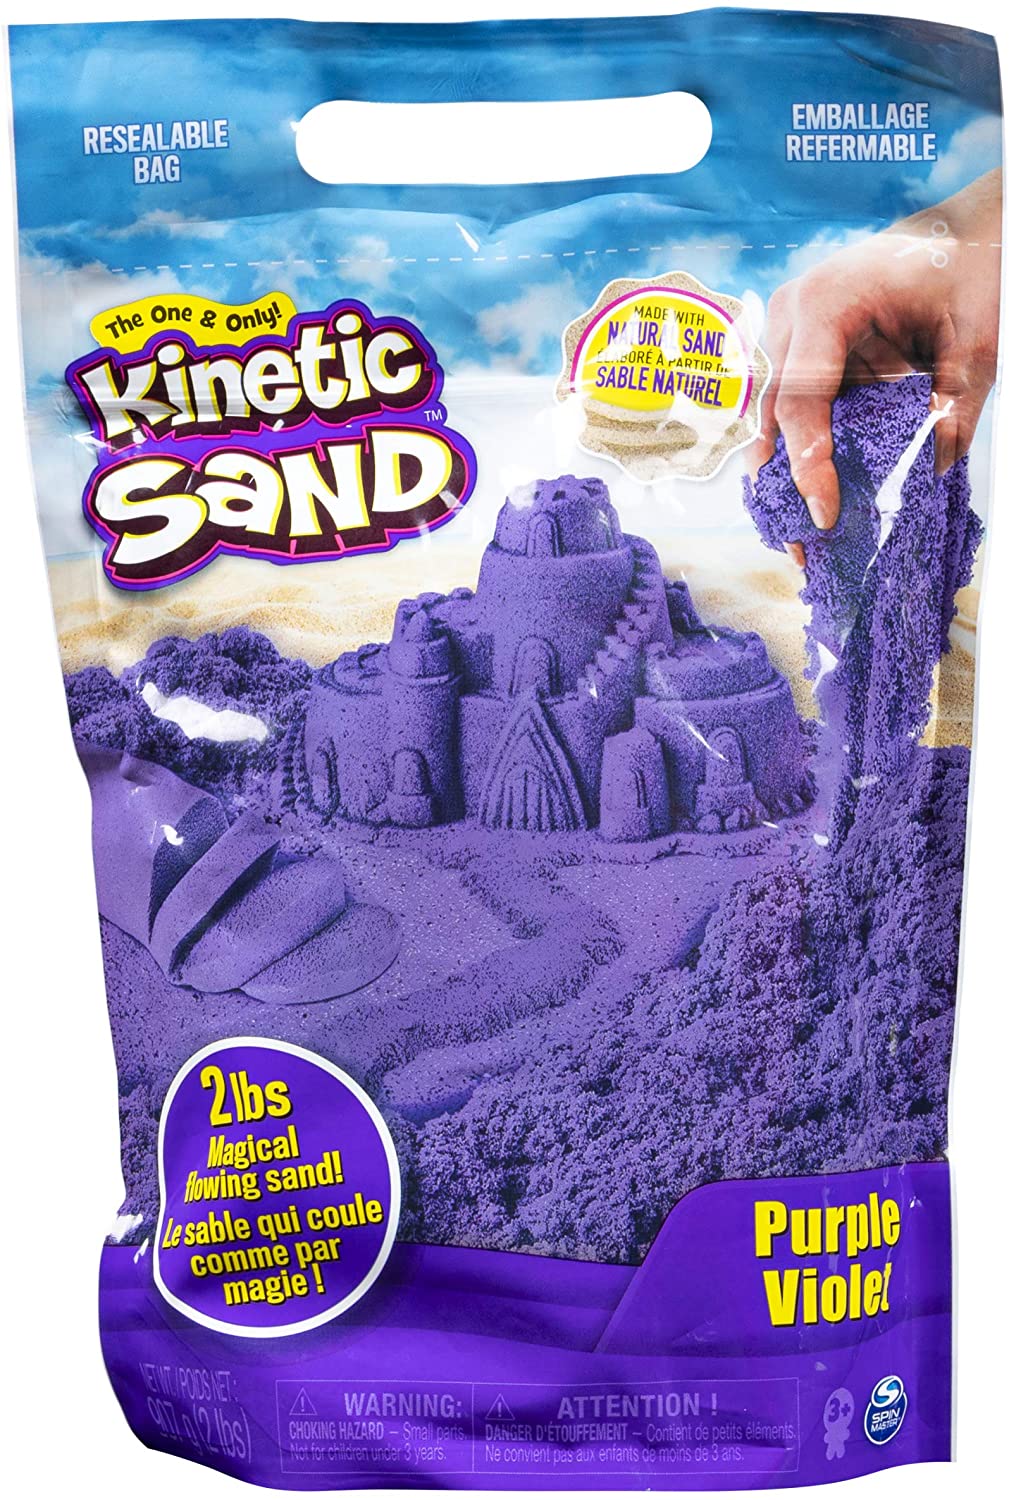 Kinetic Sand refill 900g blue green purple